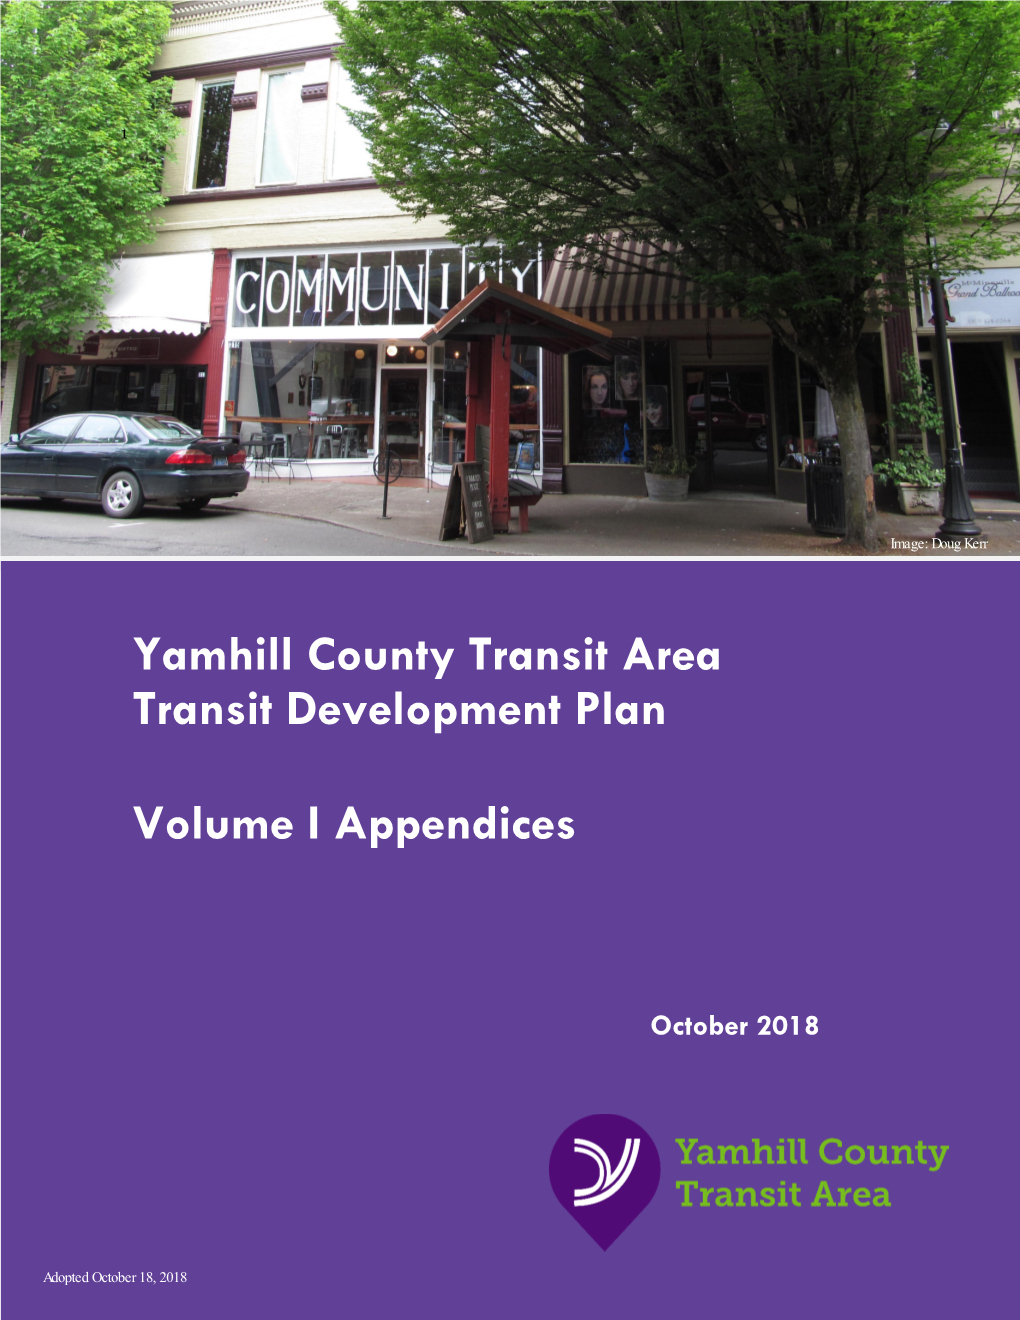 Yamhill County Transit Development Plan | Appendices